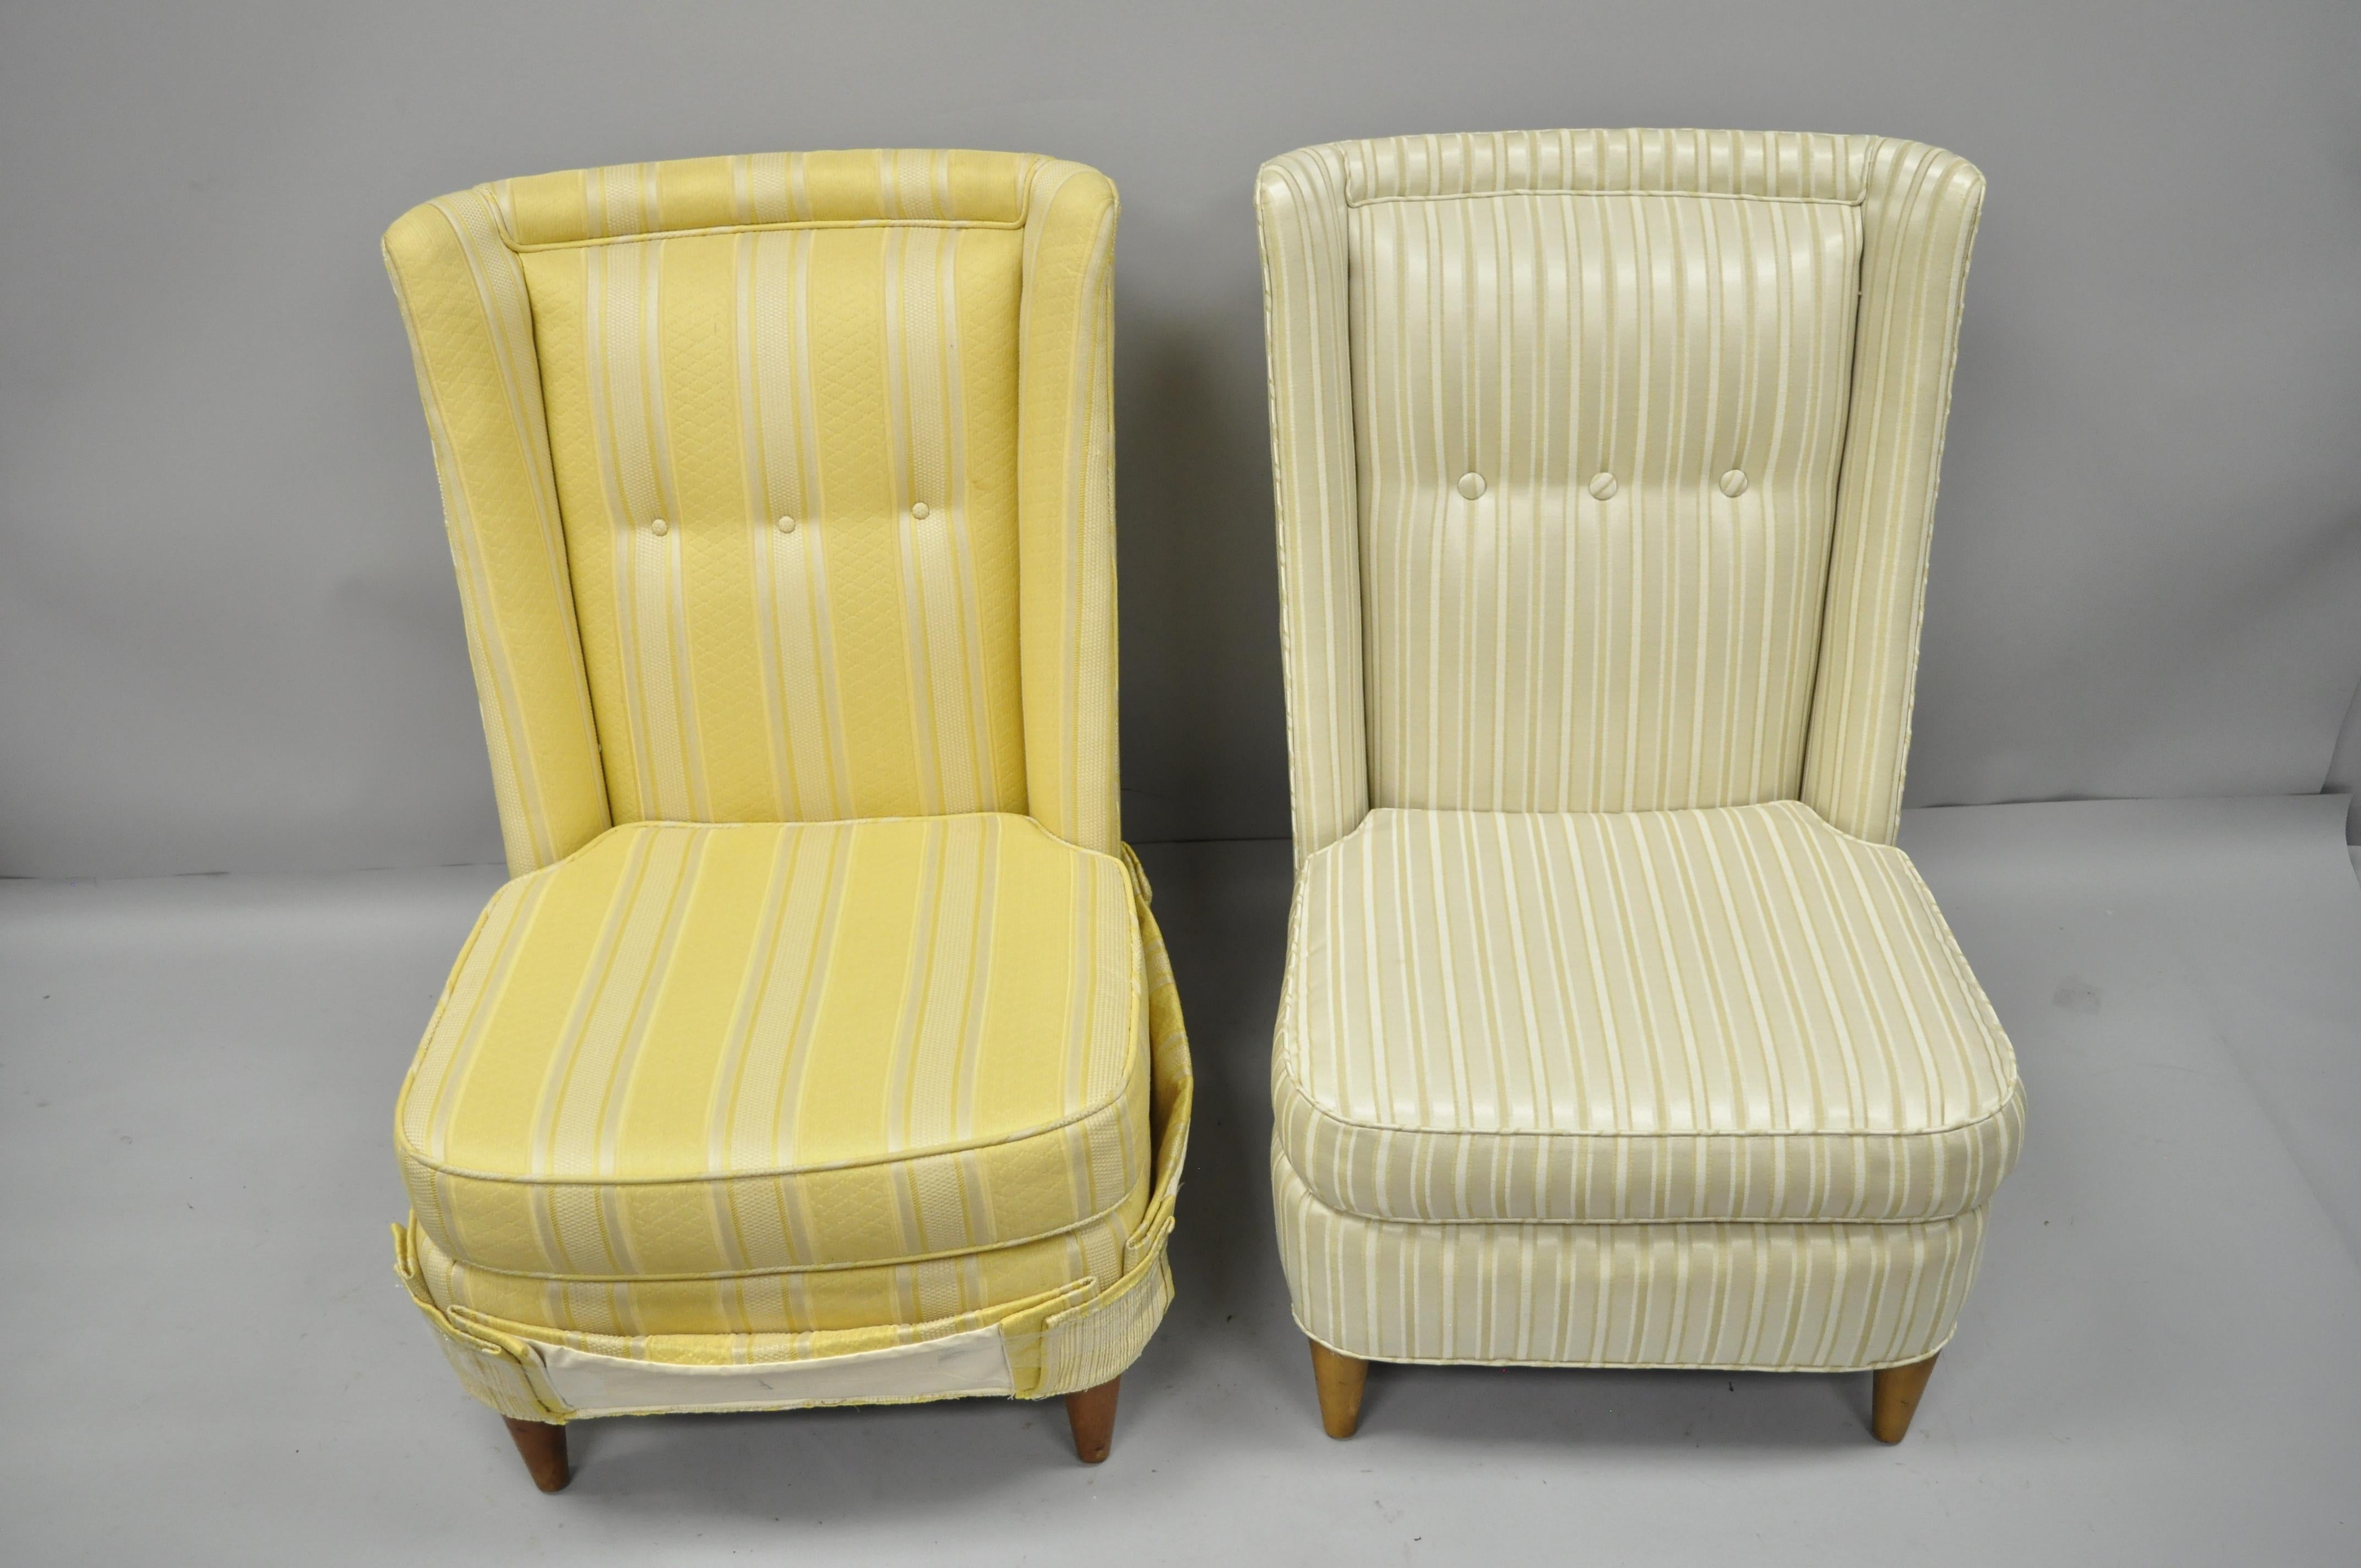 Paul Laszlo Upholstered Slipper Lounge Chair Barrel Back a Pair For Sale 5